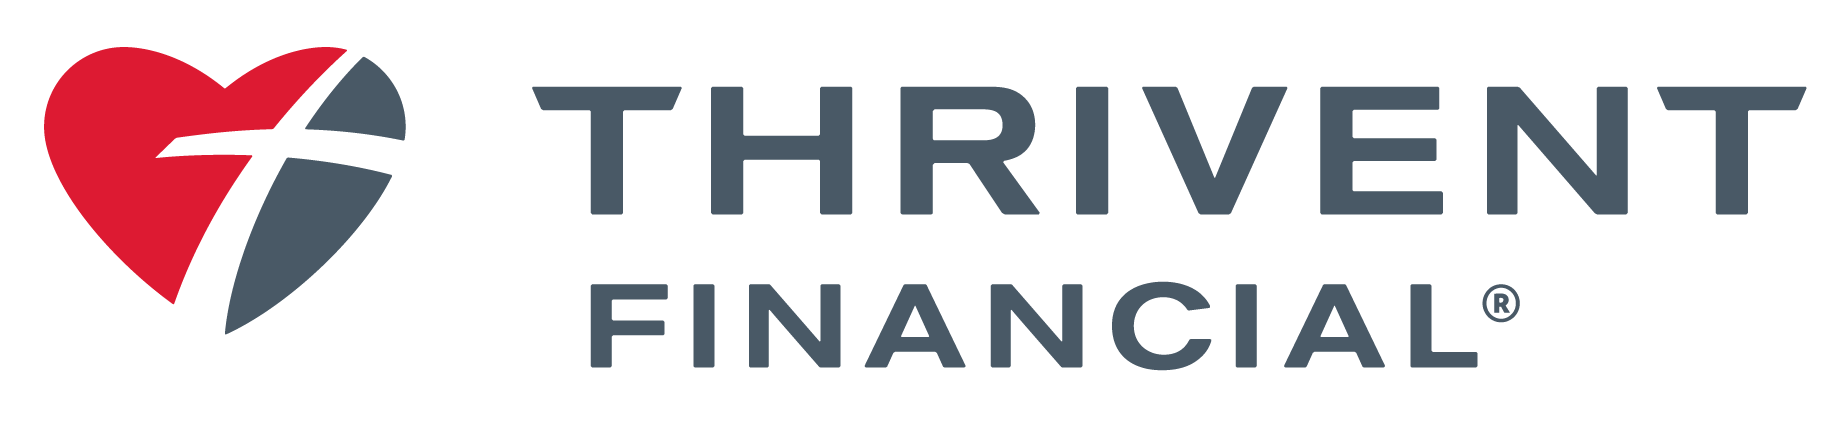 thrivent-financial-logo